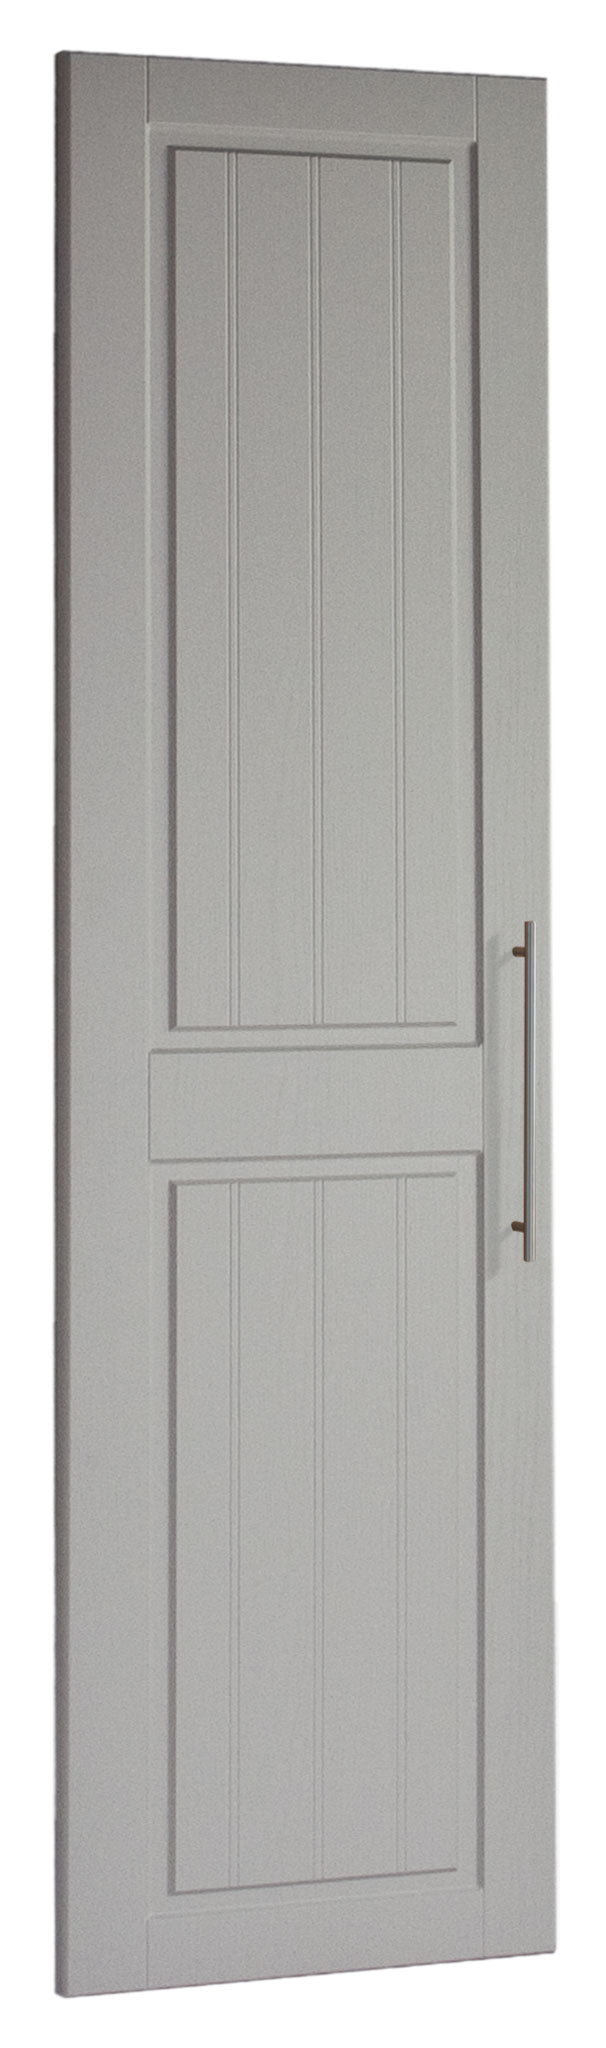 Nova style cupboard door in Little Greene colour